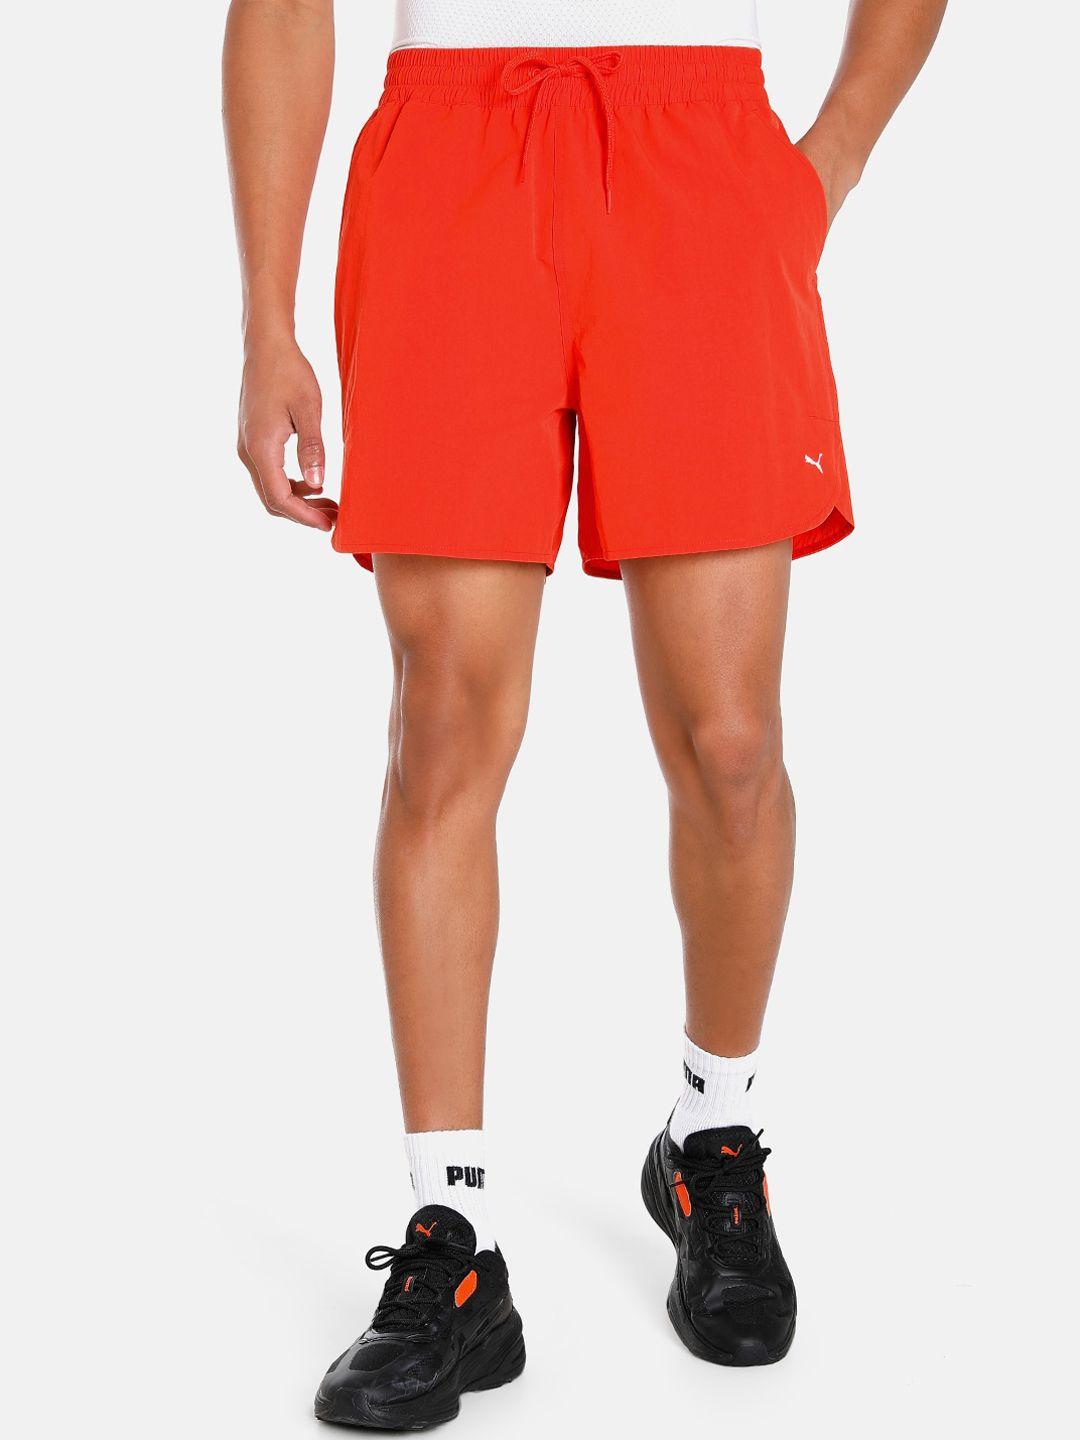 puma-men-track-meet-logo-printed-sports-shorts